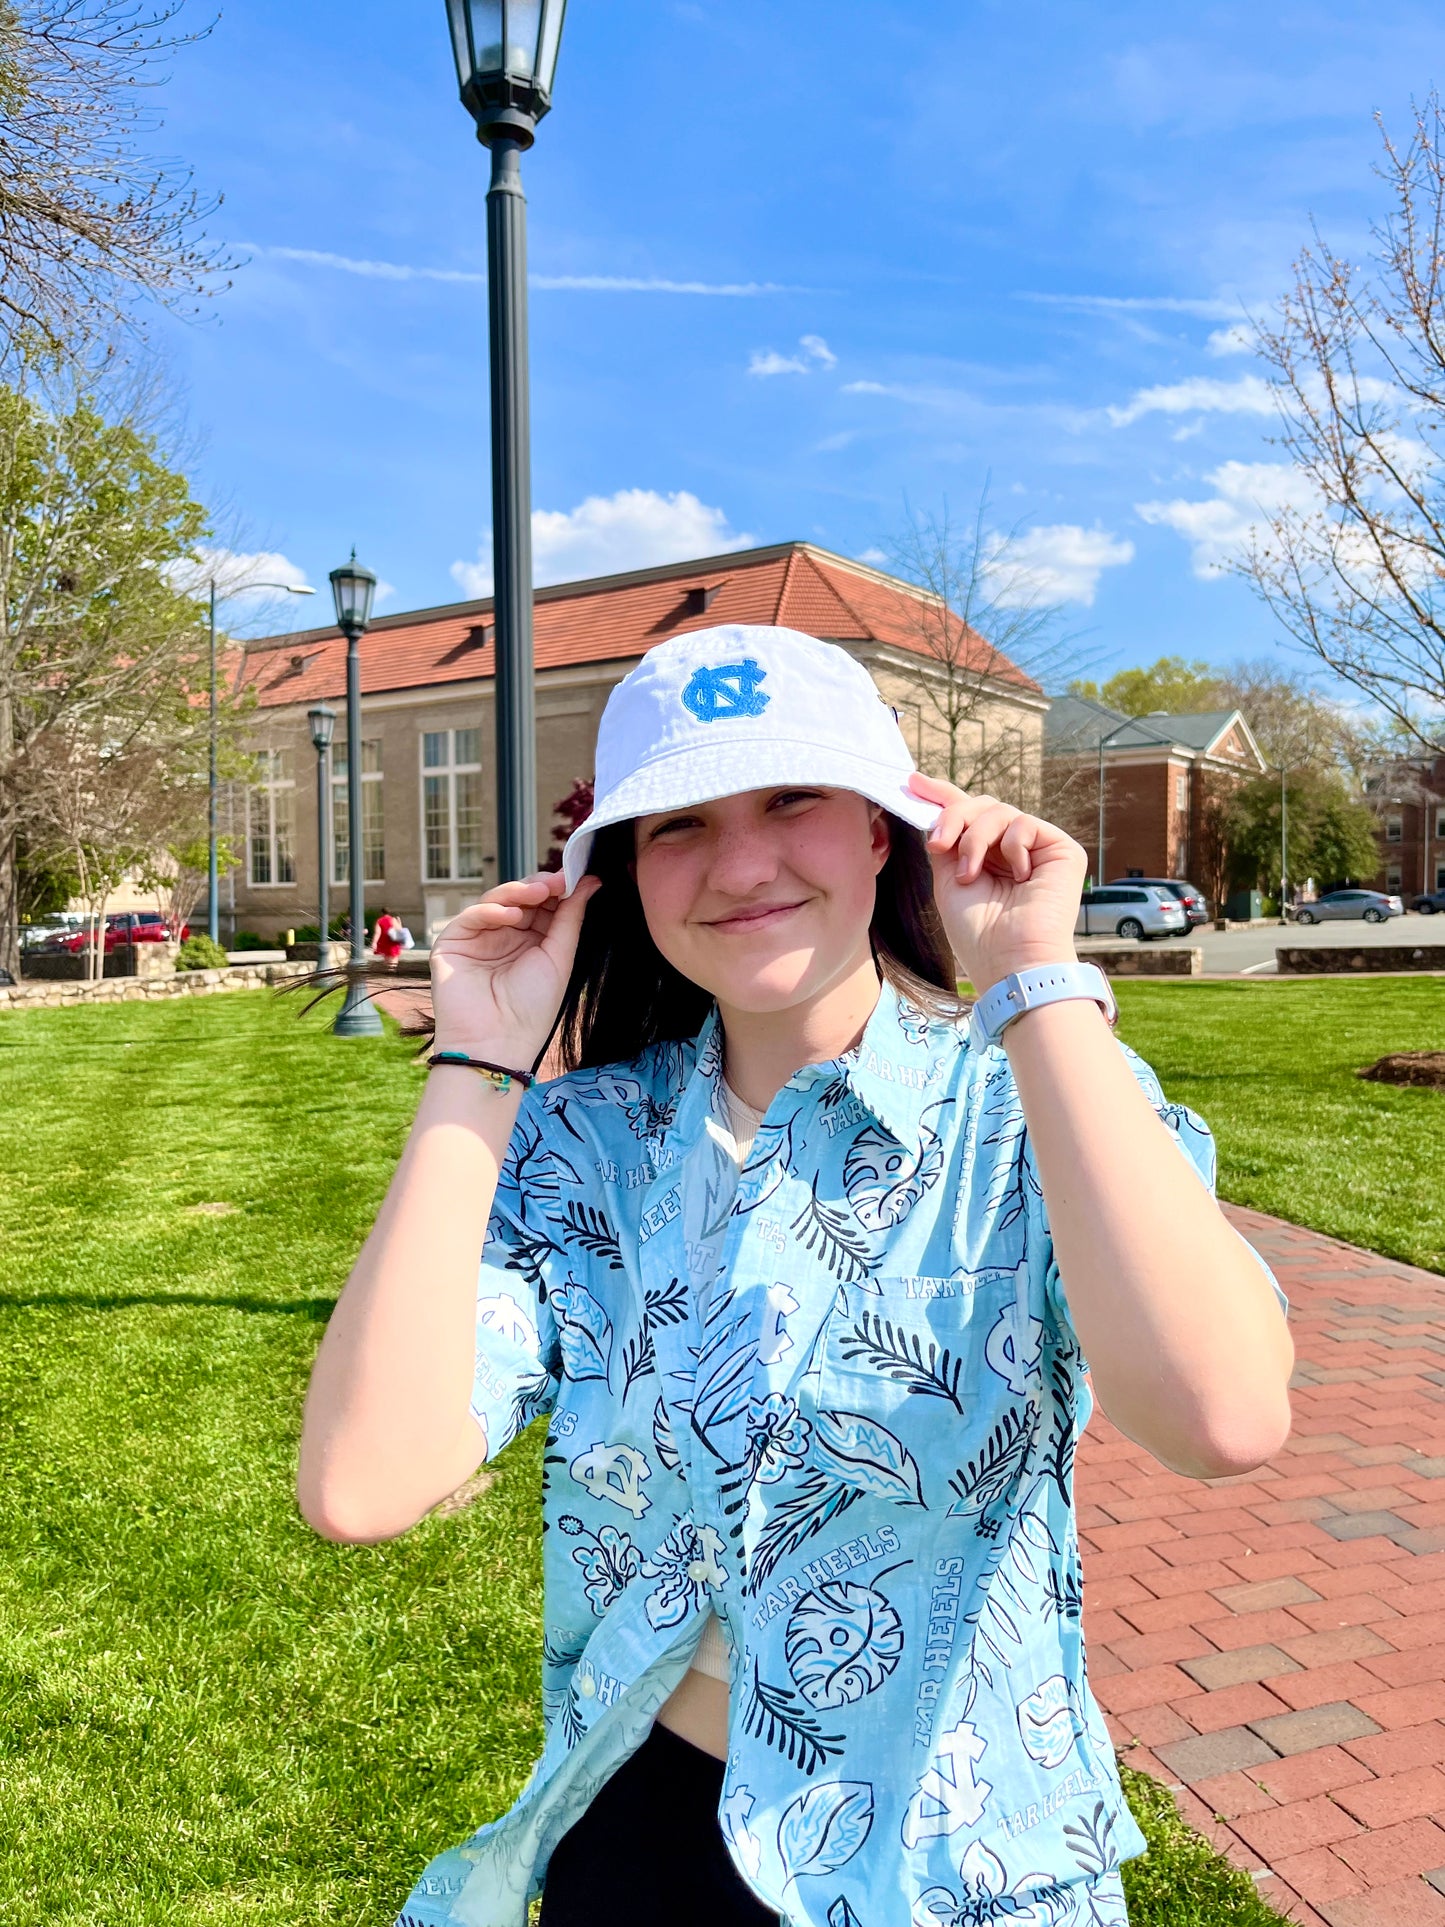 UNC Bucket Hat in White with North Carolina Interlock Logo in Carolina Blue